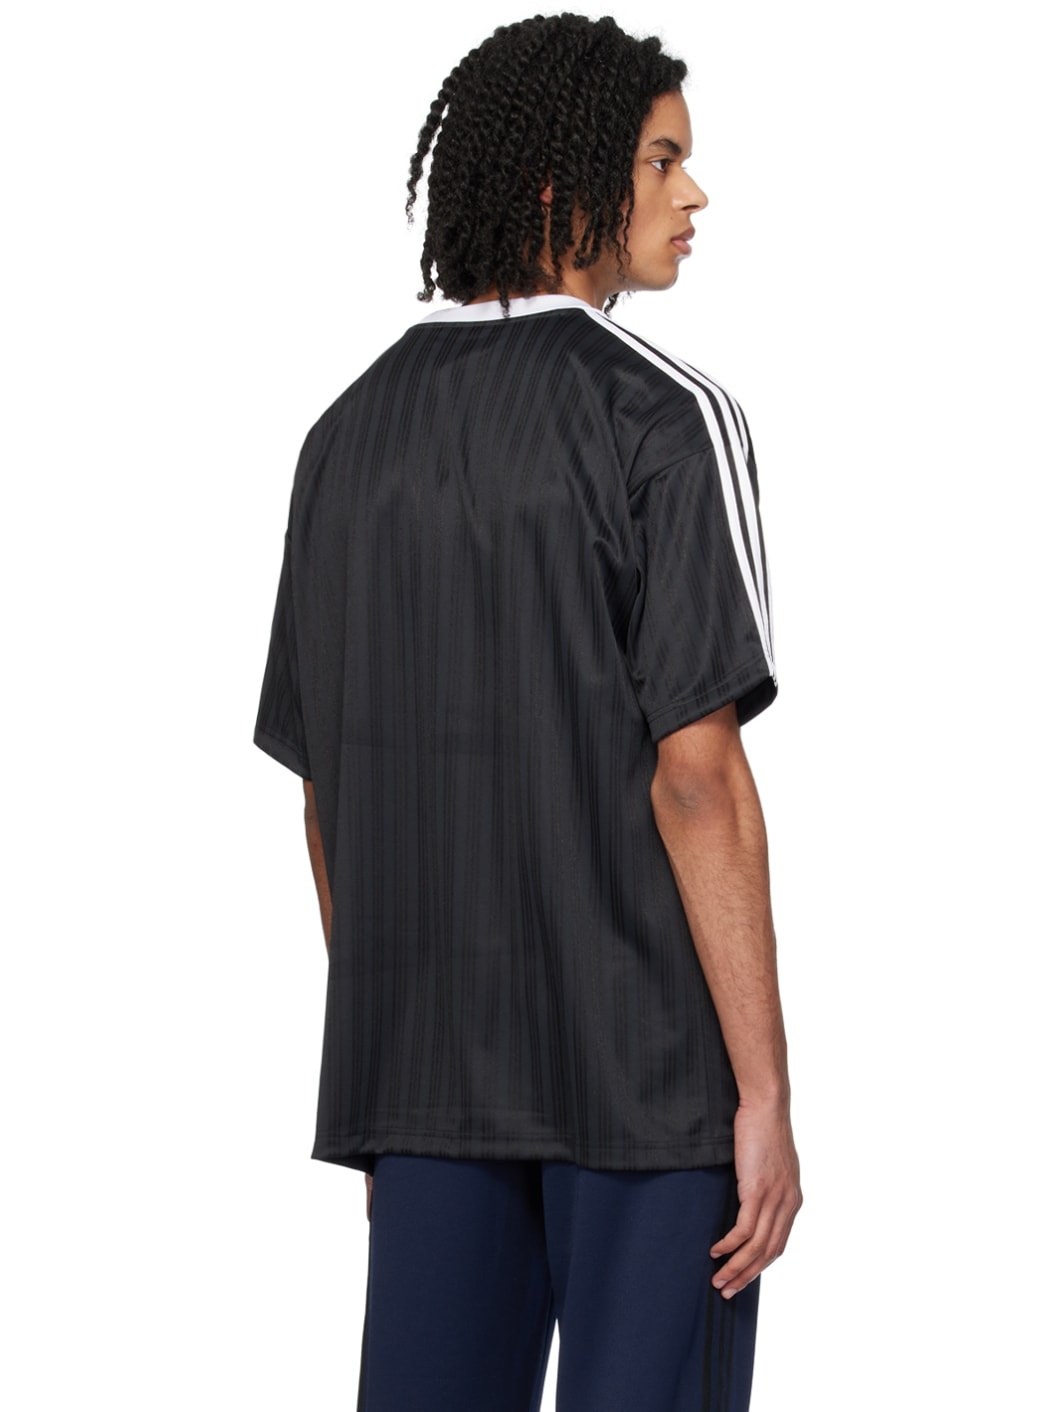 Black & White Stripe T-Shirt - 3